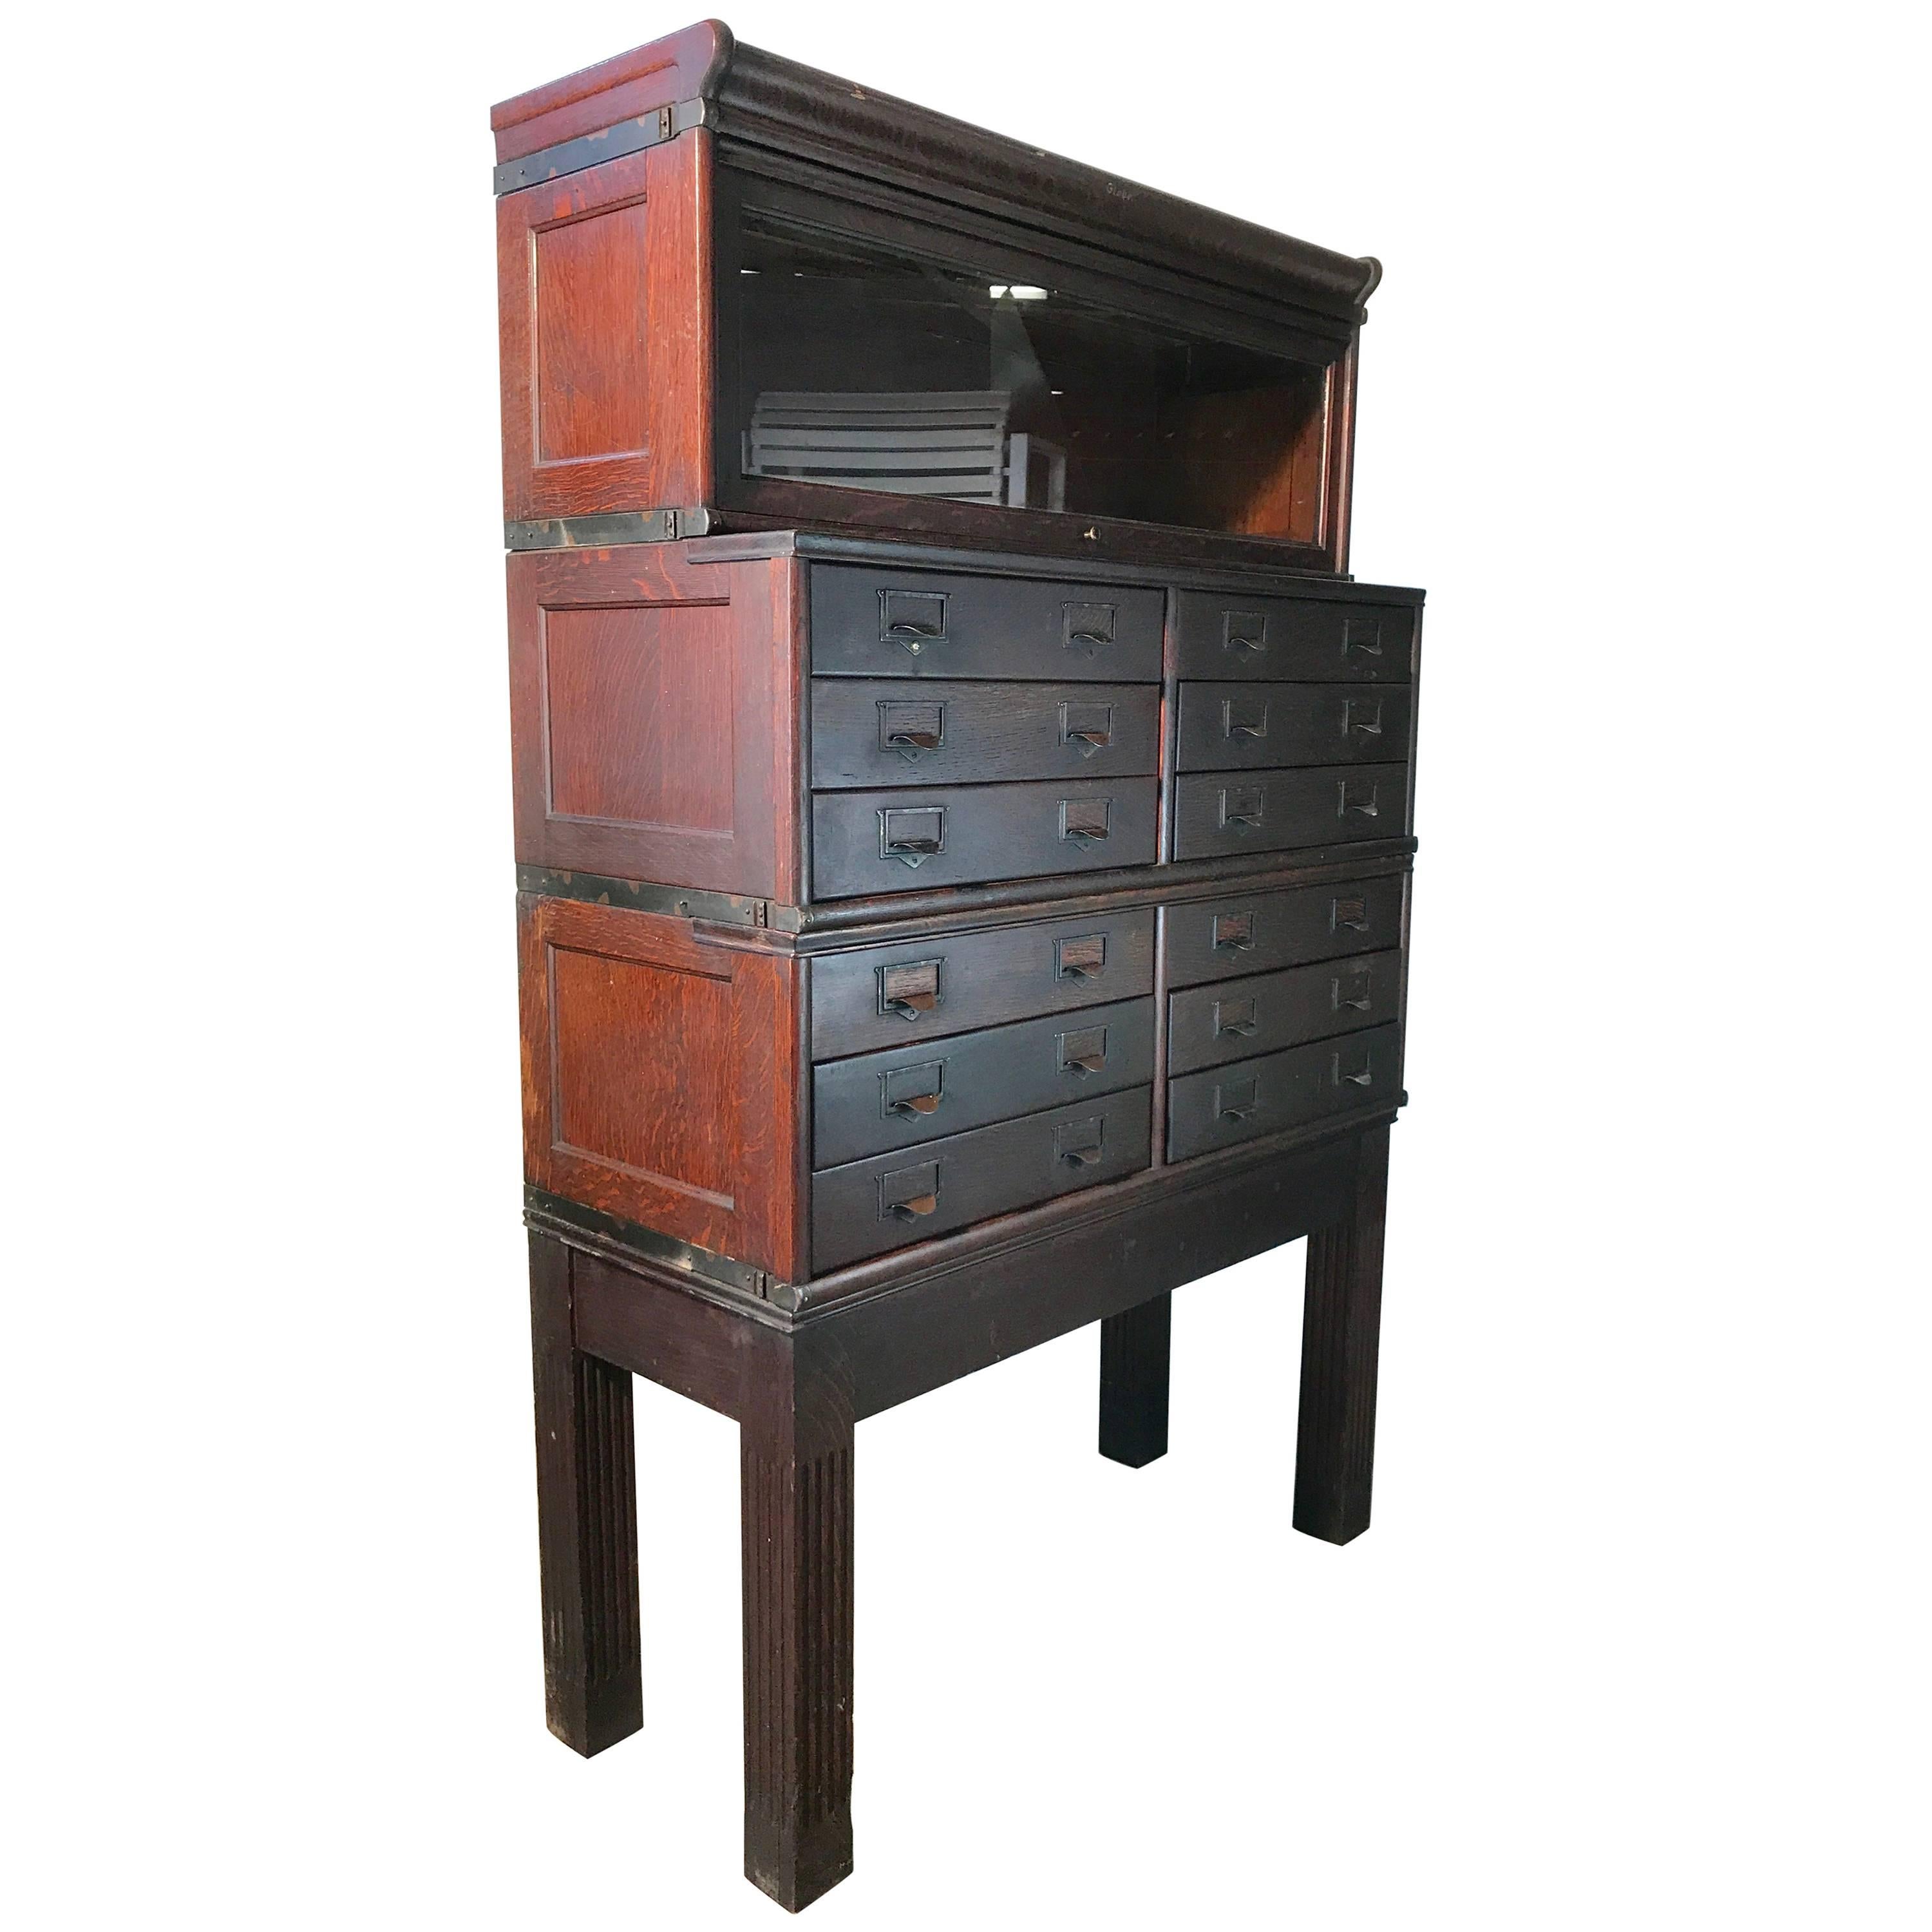 Unusual Globe Wernicke Stacking Cabinet with Bookcase Top, Quarter Sawn Oak